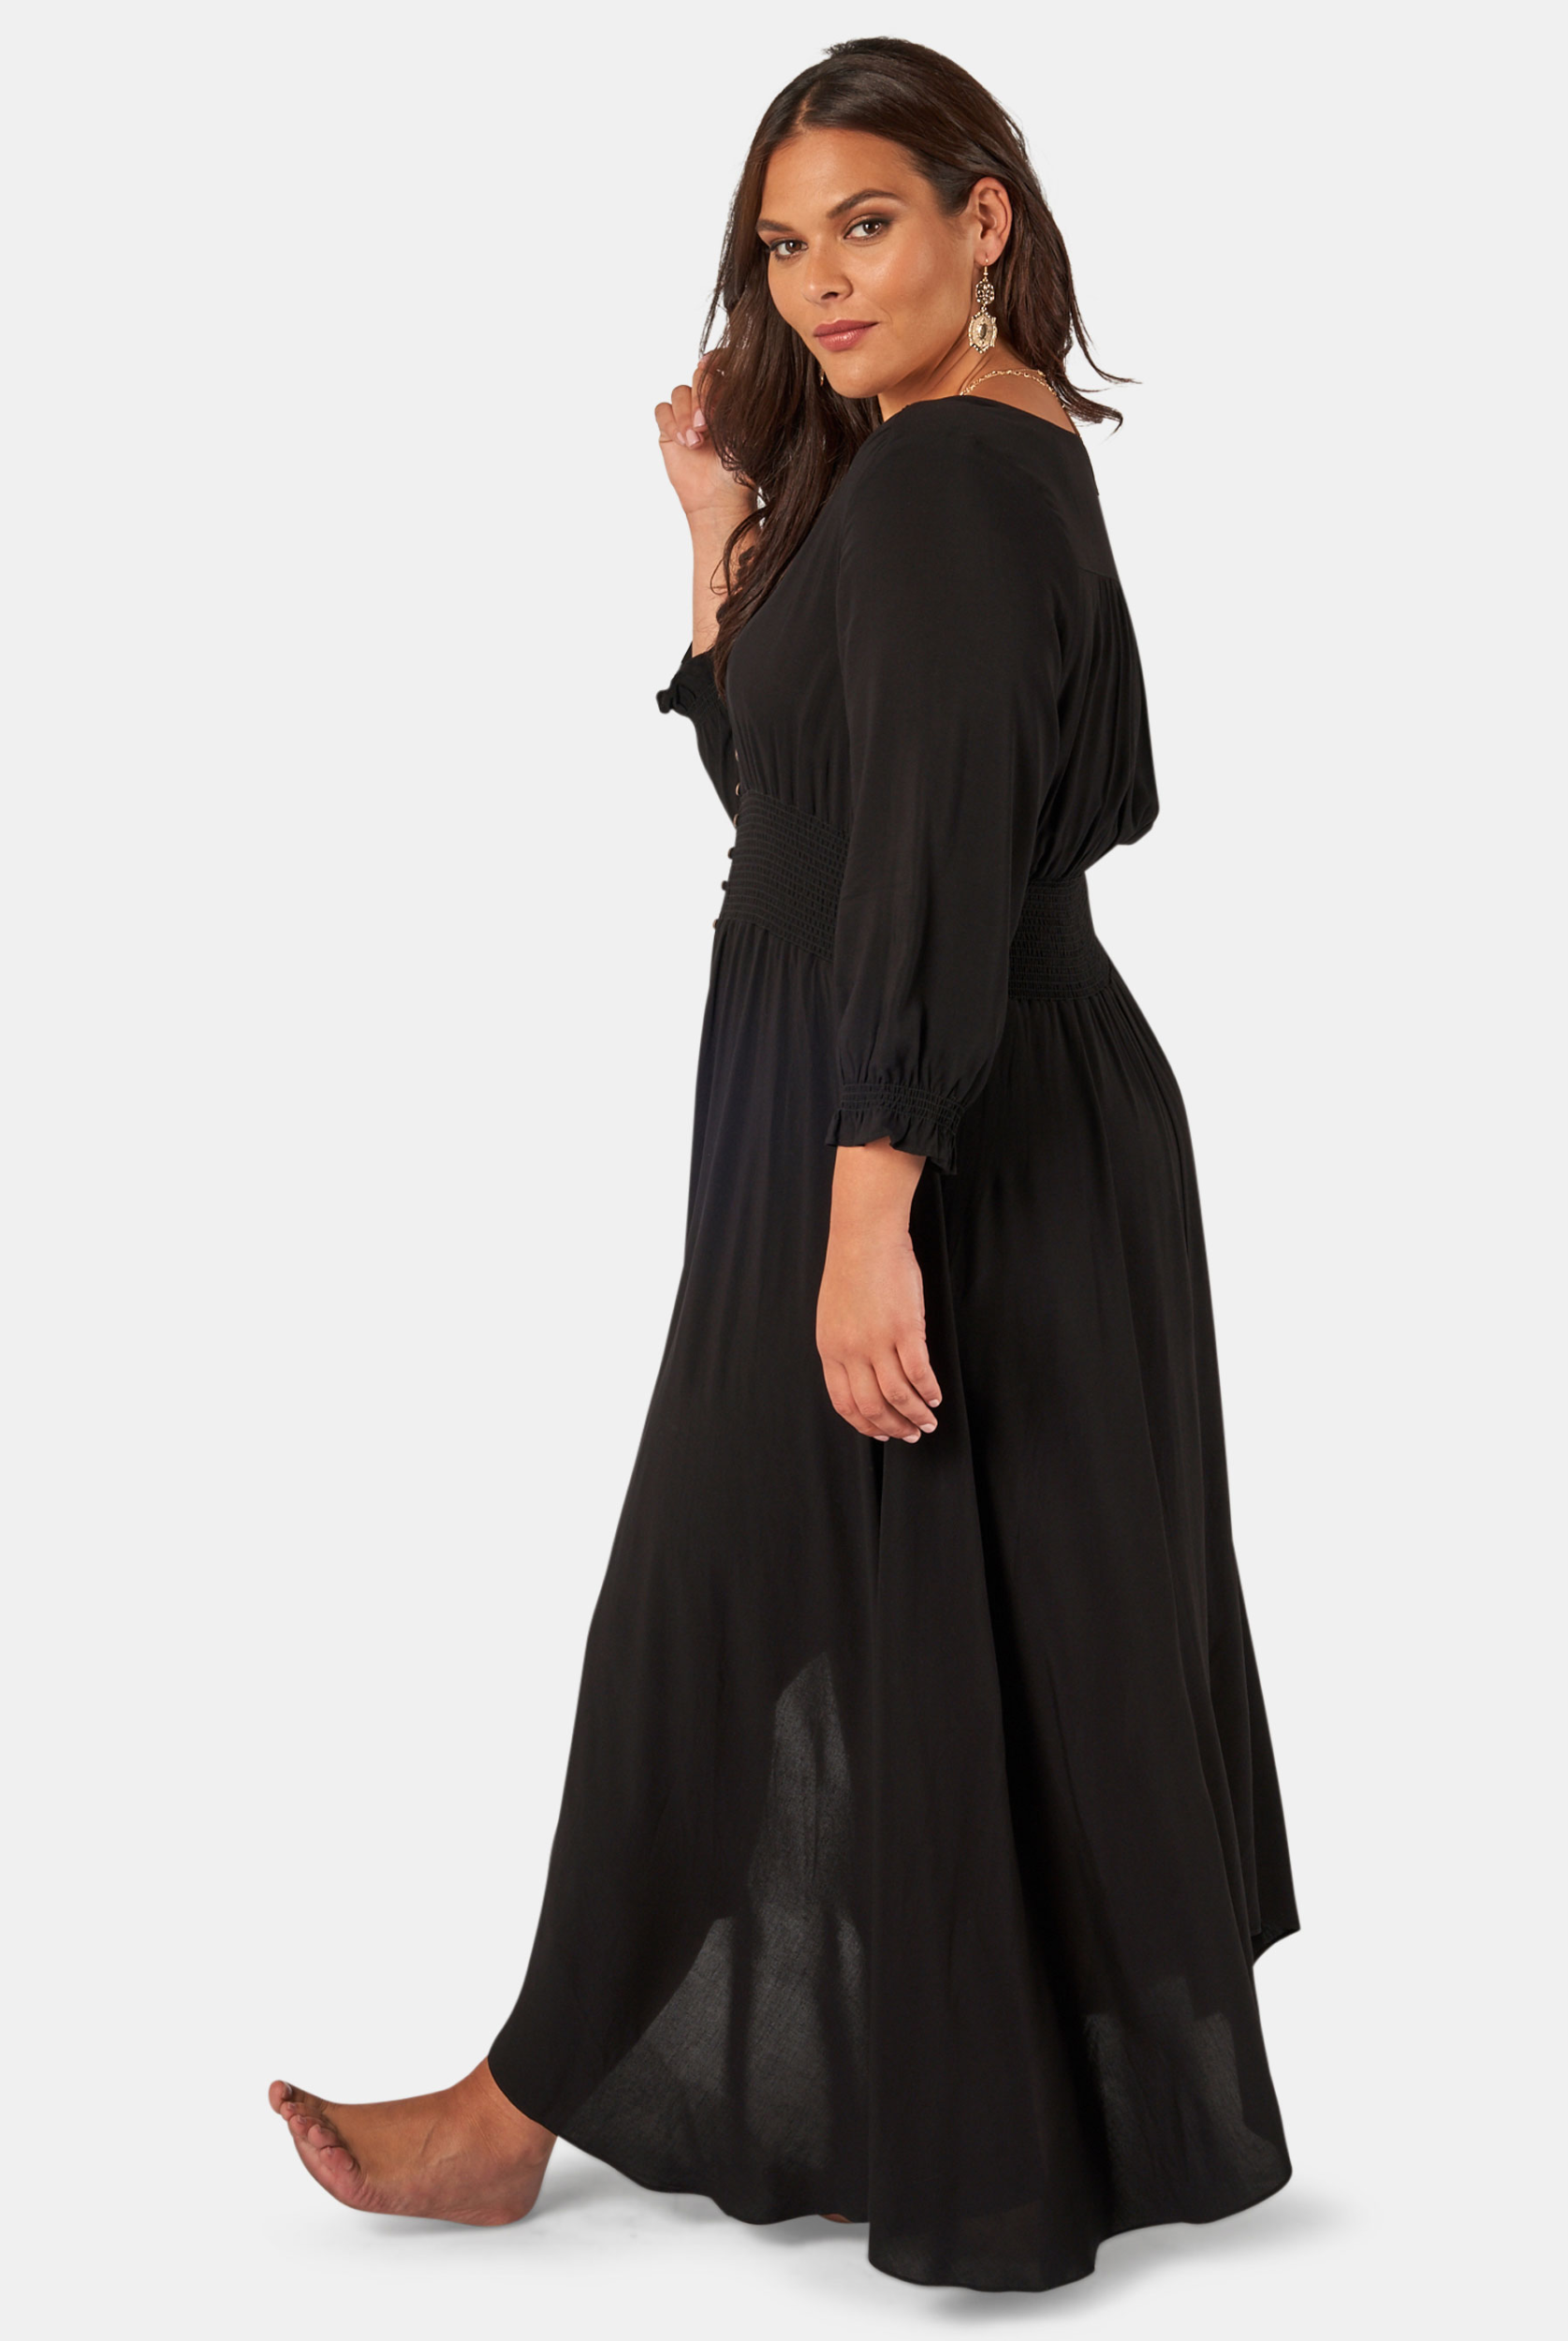 Model wearing the button through brown sugar dress in black